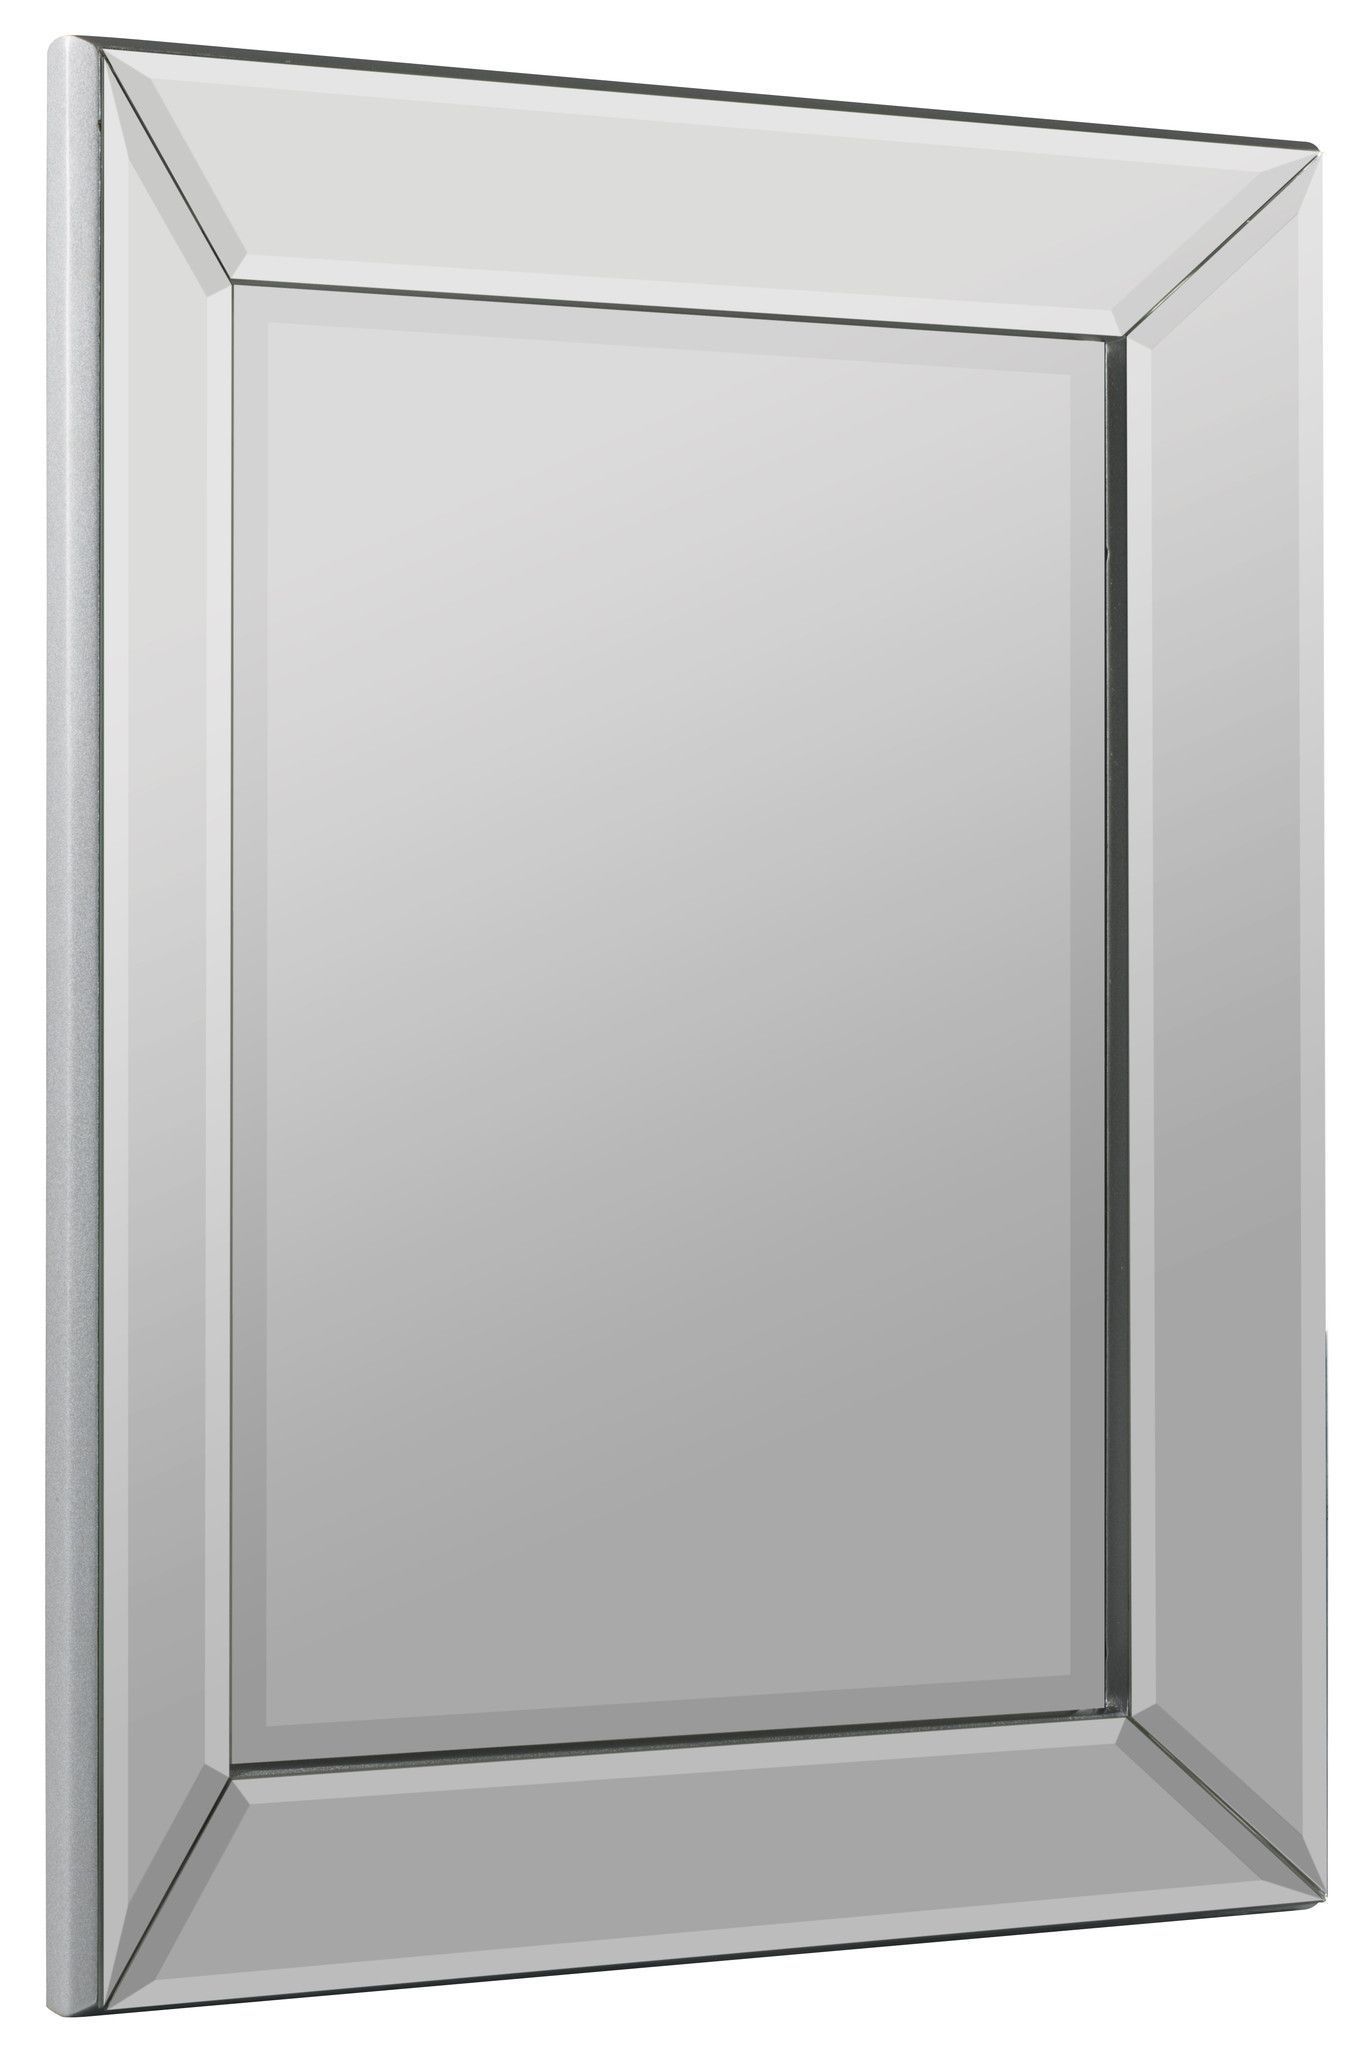 Porter Mirror Frameless Mirror; Beveled Mirror | Diy Bathroom Remodel Inside Square Frameless Beveled Wall Mirrors (View 1 of 15)